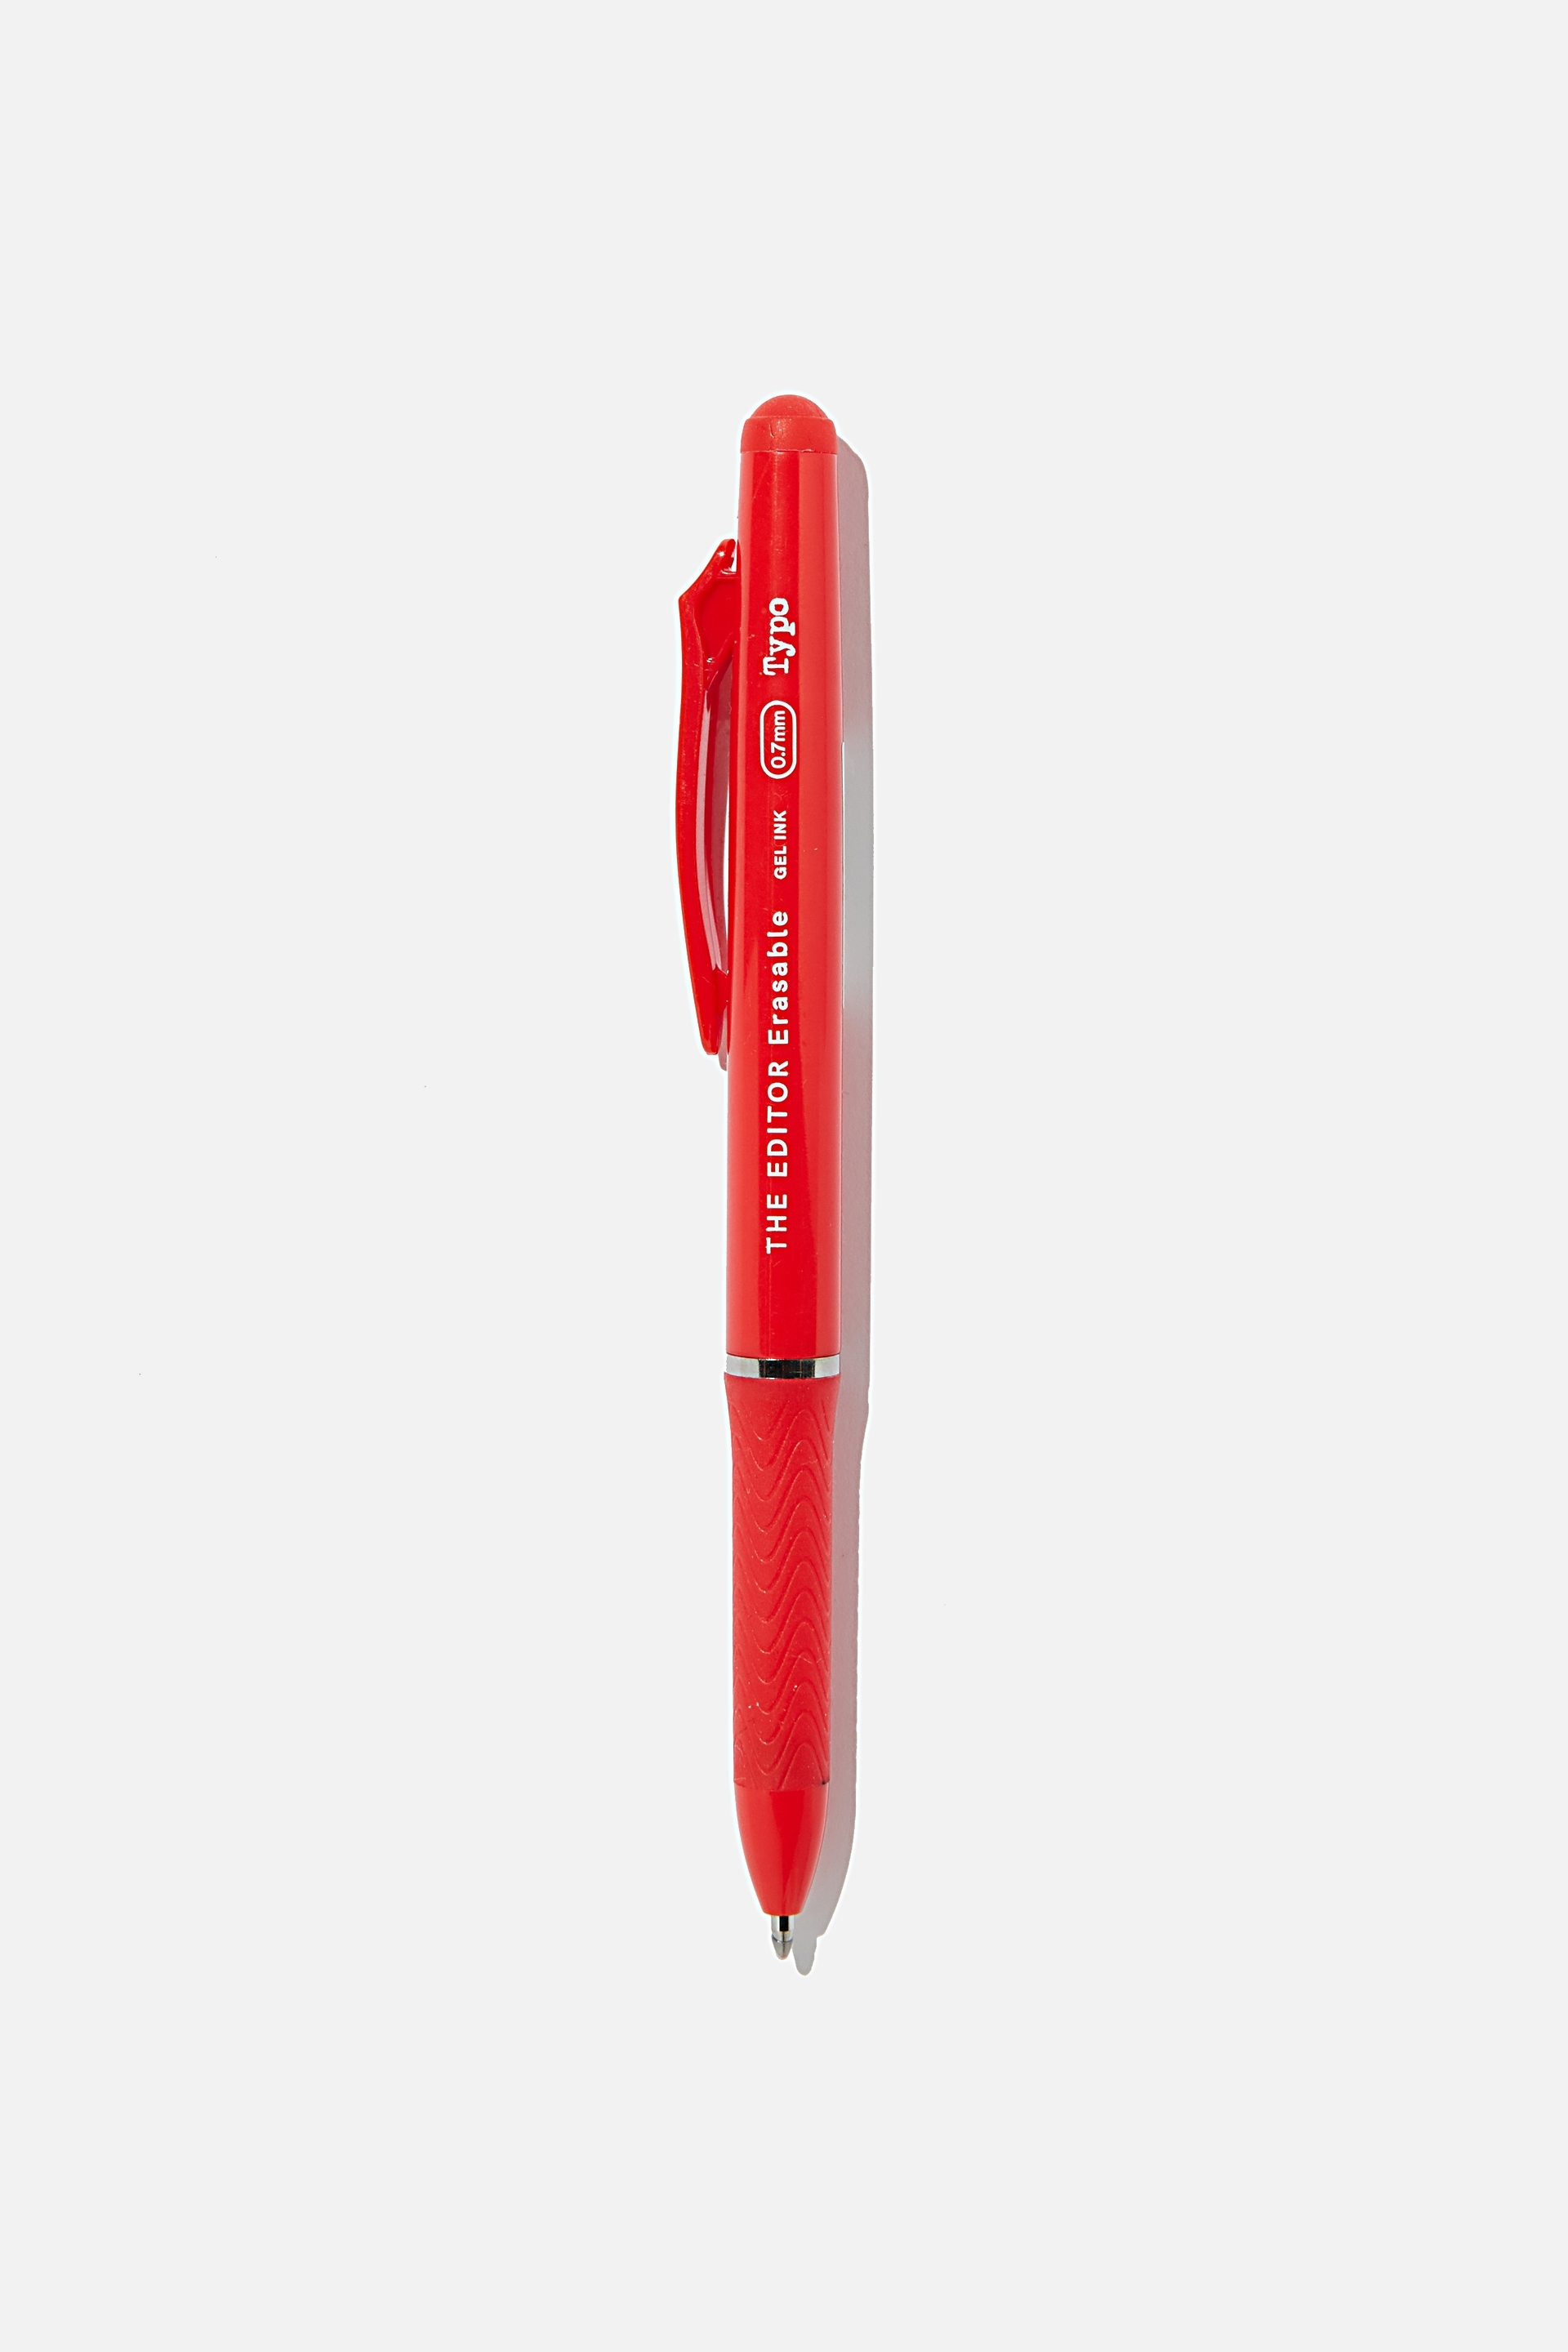 Typo - Wipeout Gel Pen - Red